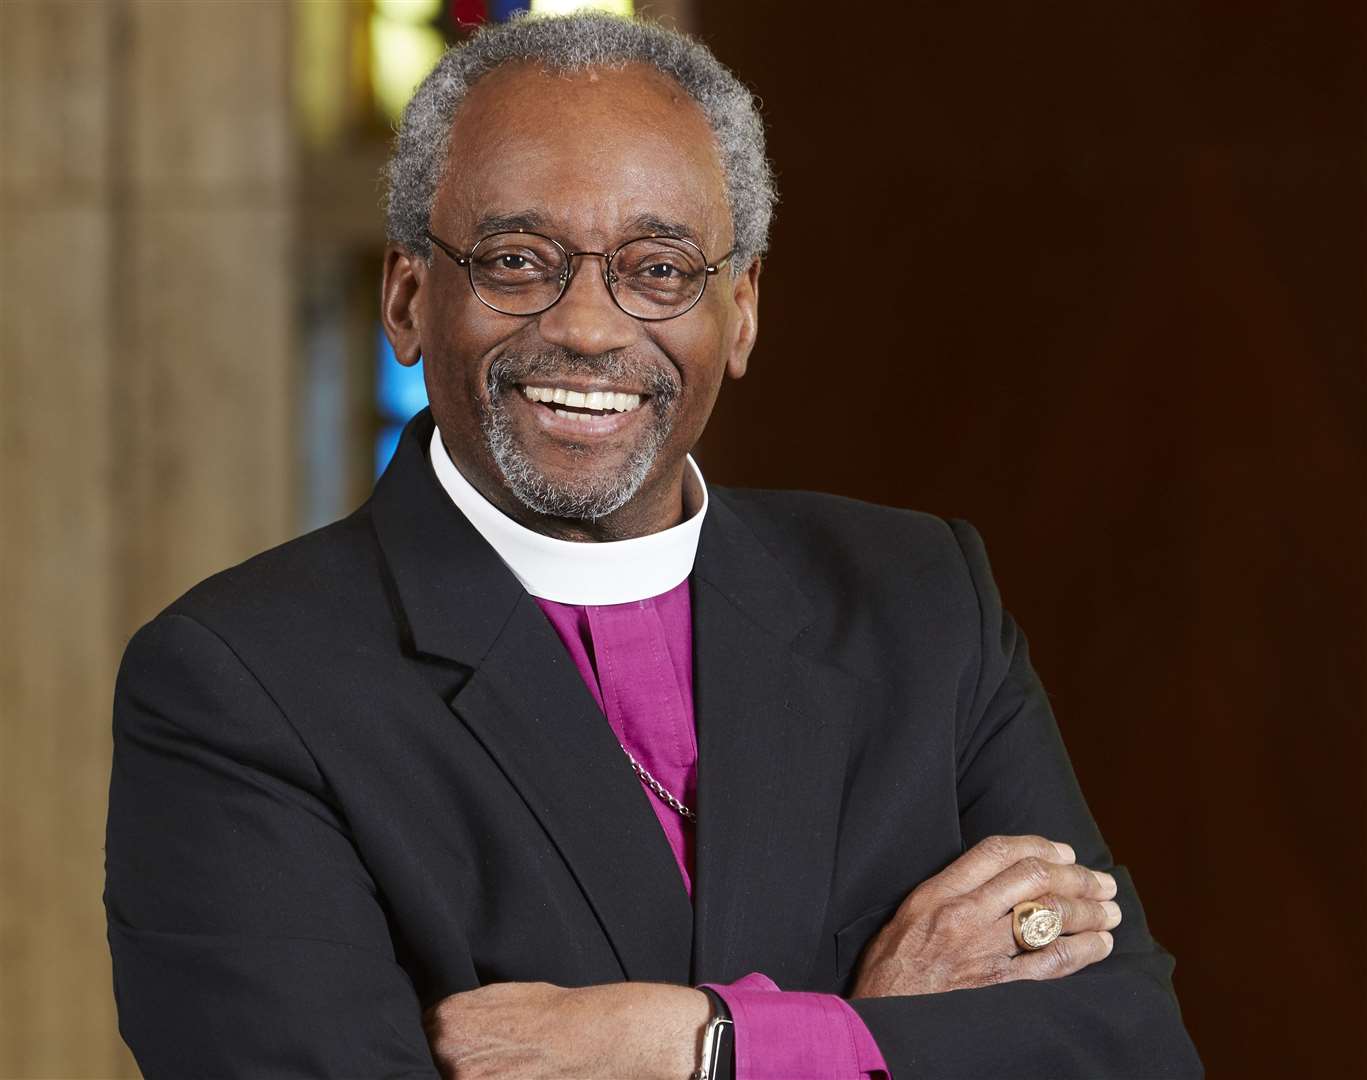 Bishop Michael B Curry